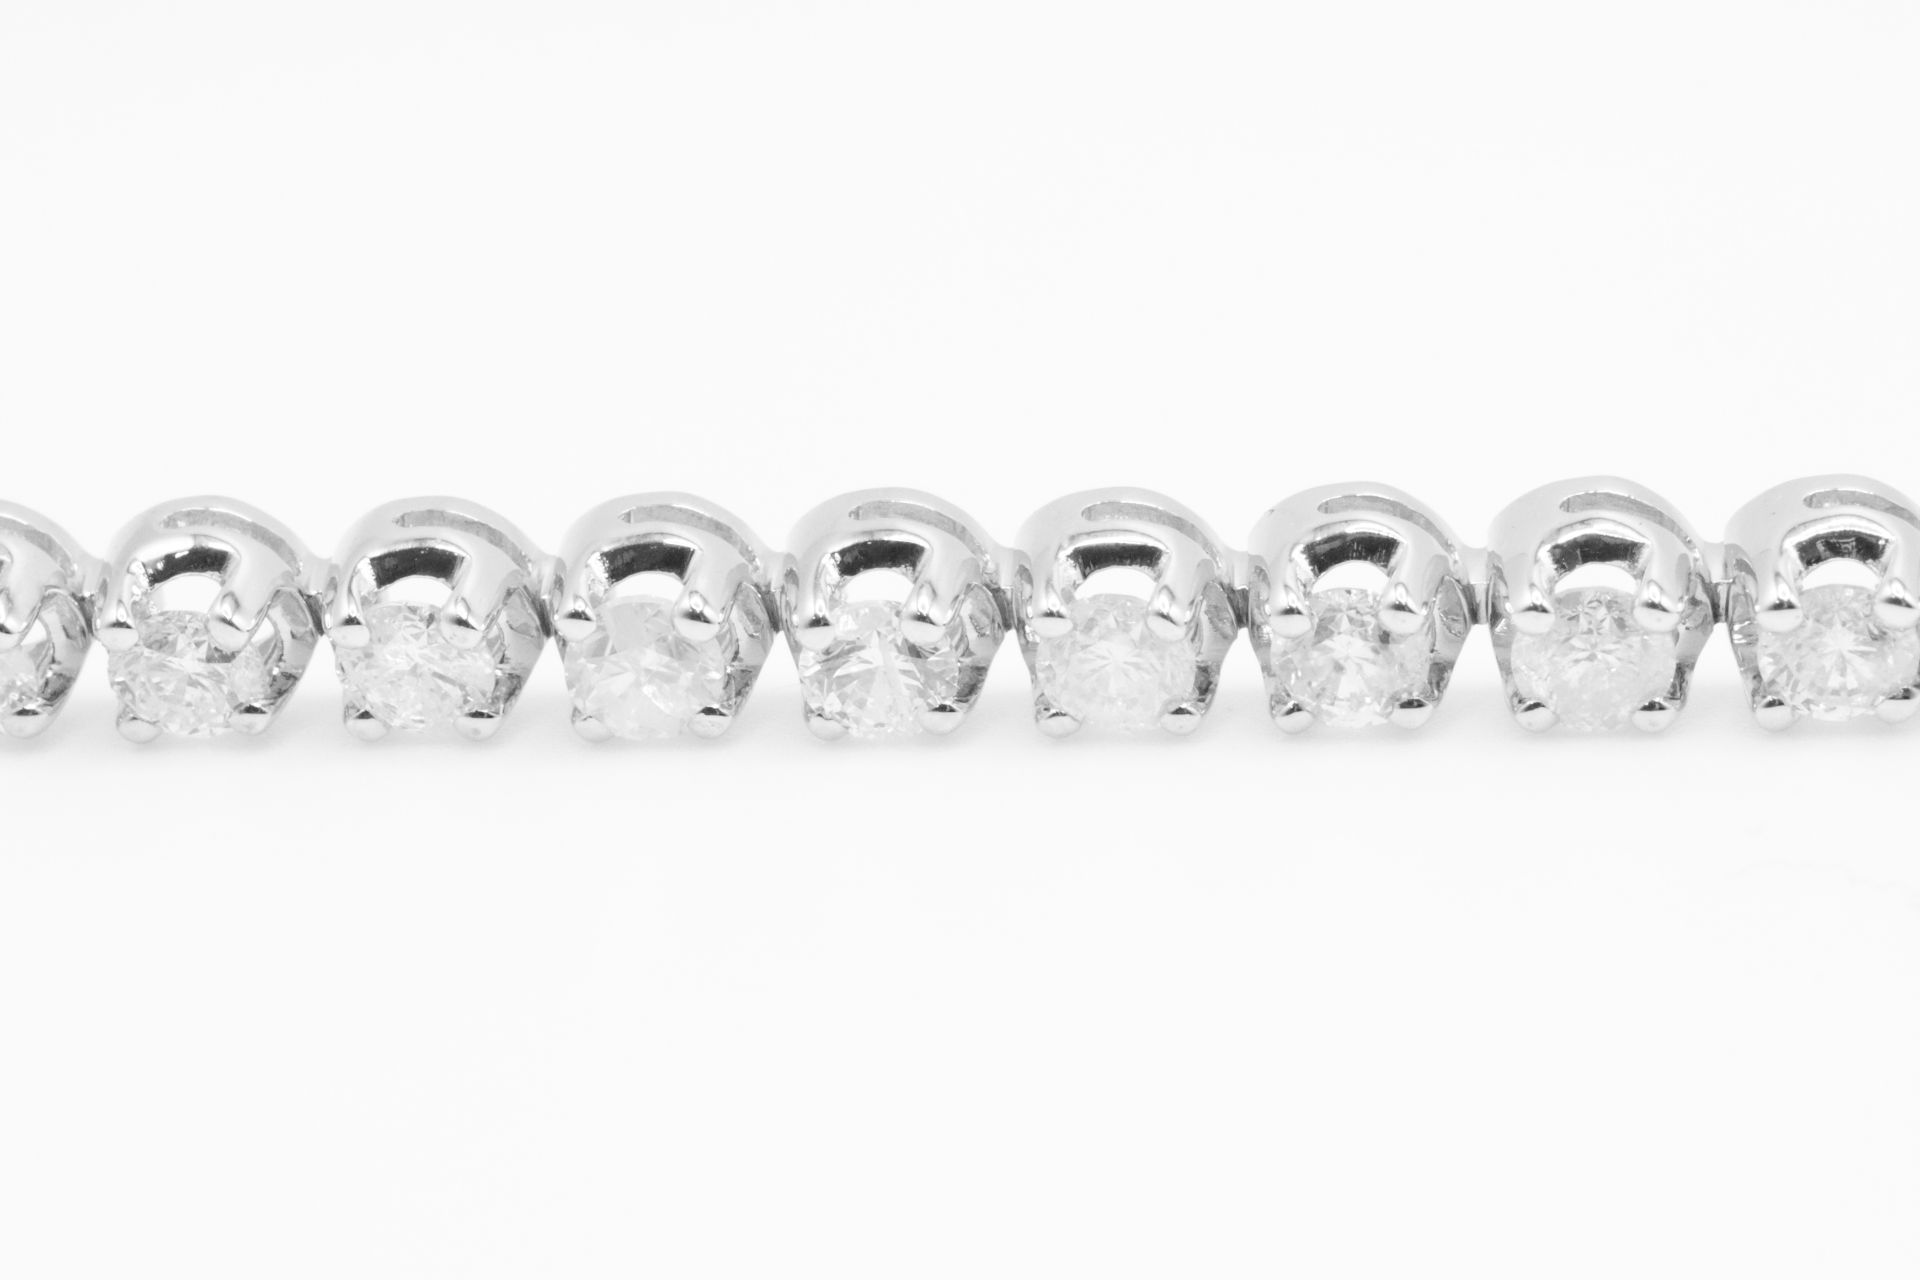 7.0 Carat 18ct White Gold Tennis Bracelet set with Round Brilliant Cut Natural Diamonds - Image 7 of 16